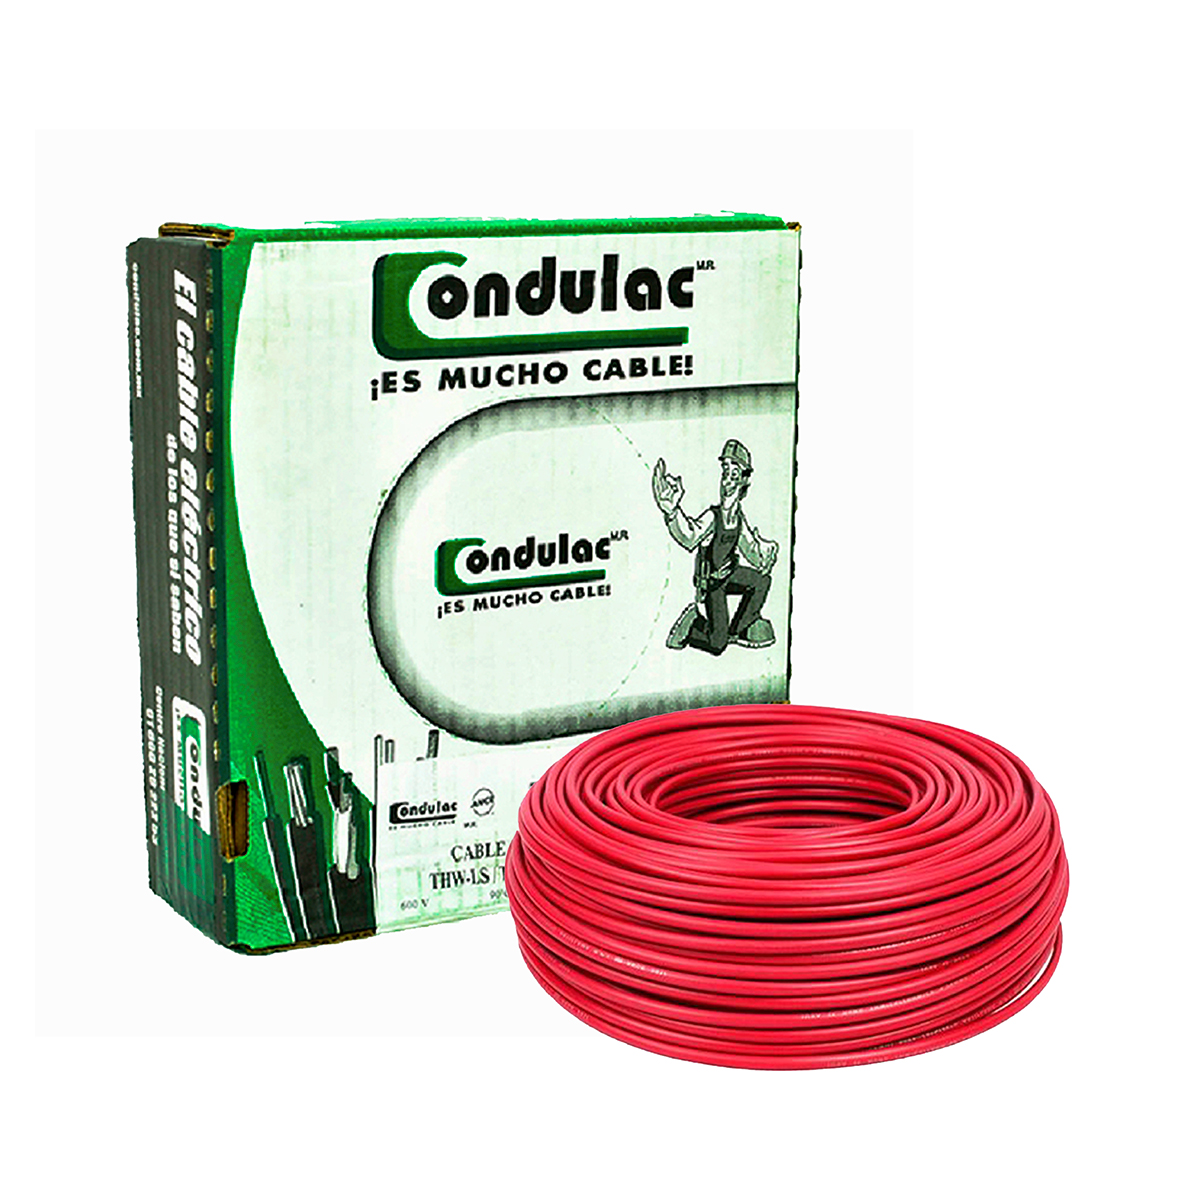 CONDULAC Caja 100 Mts Cable Rojo Thw Cal 8 Awg 100%cobre 